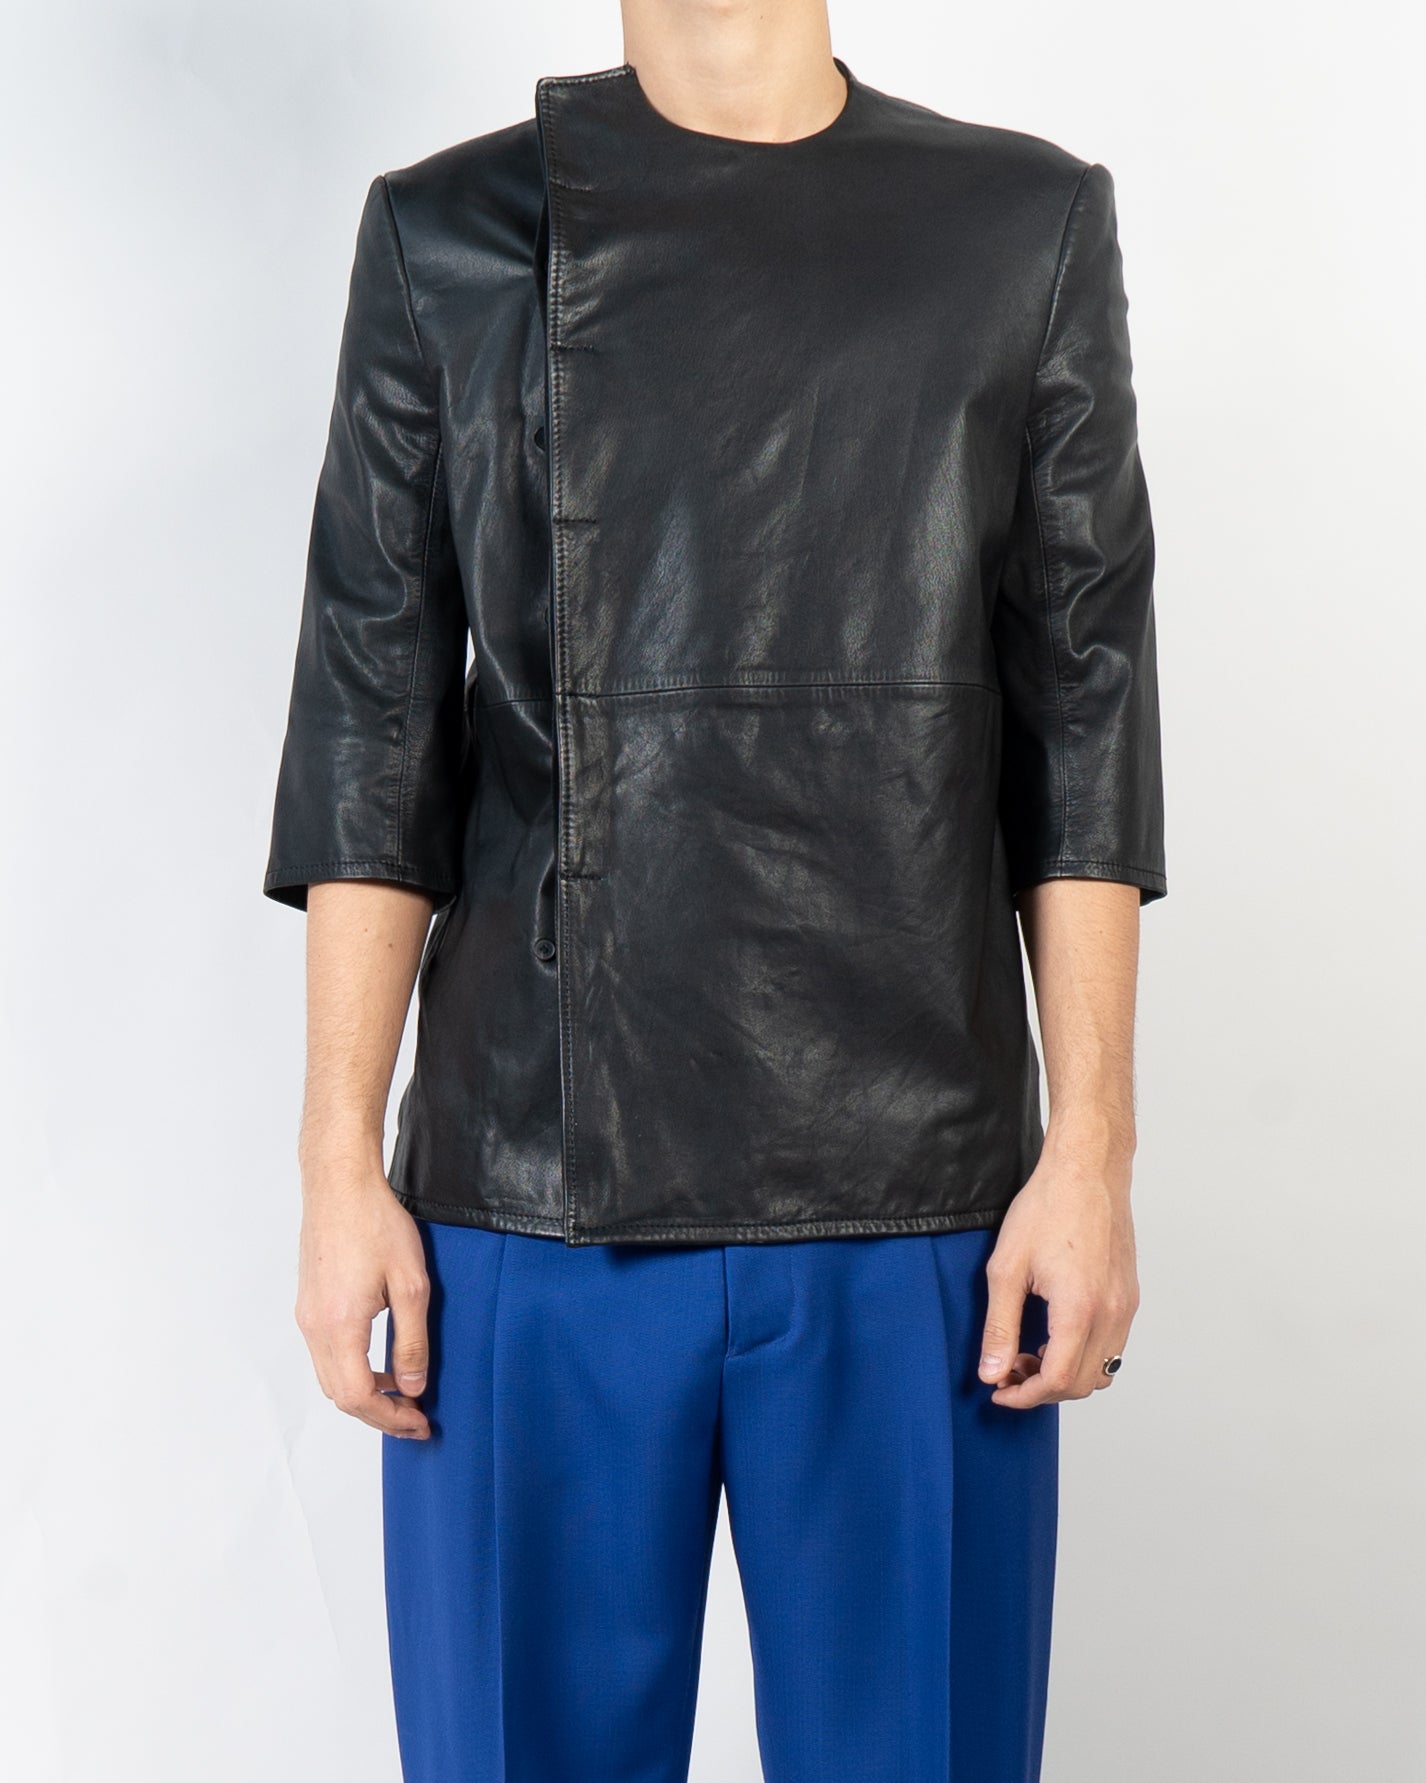 SS19 Miza Black Leather Asymmetrical Shirt 1 of 1  Sample